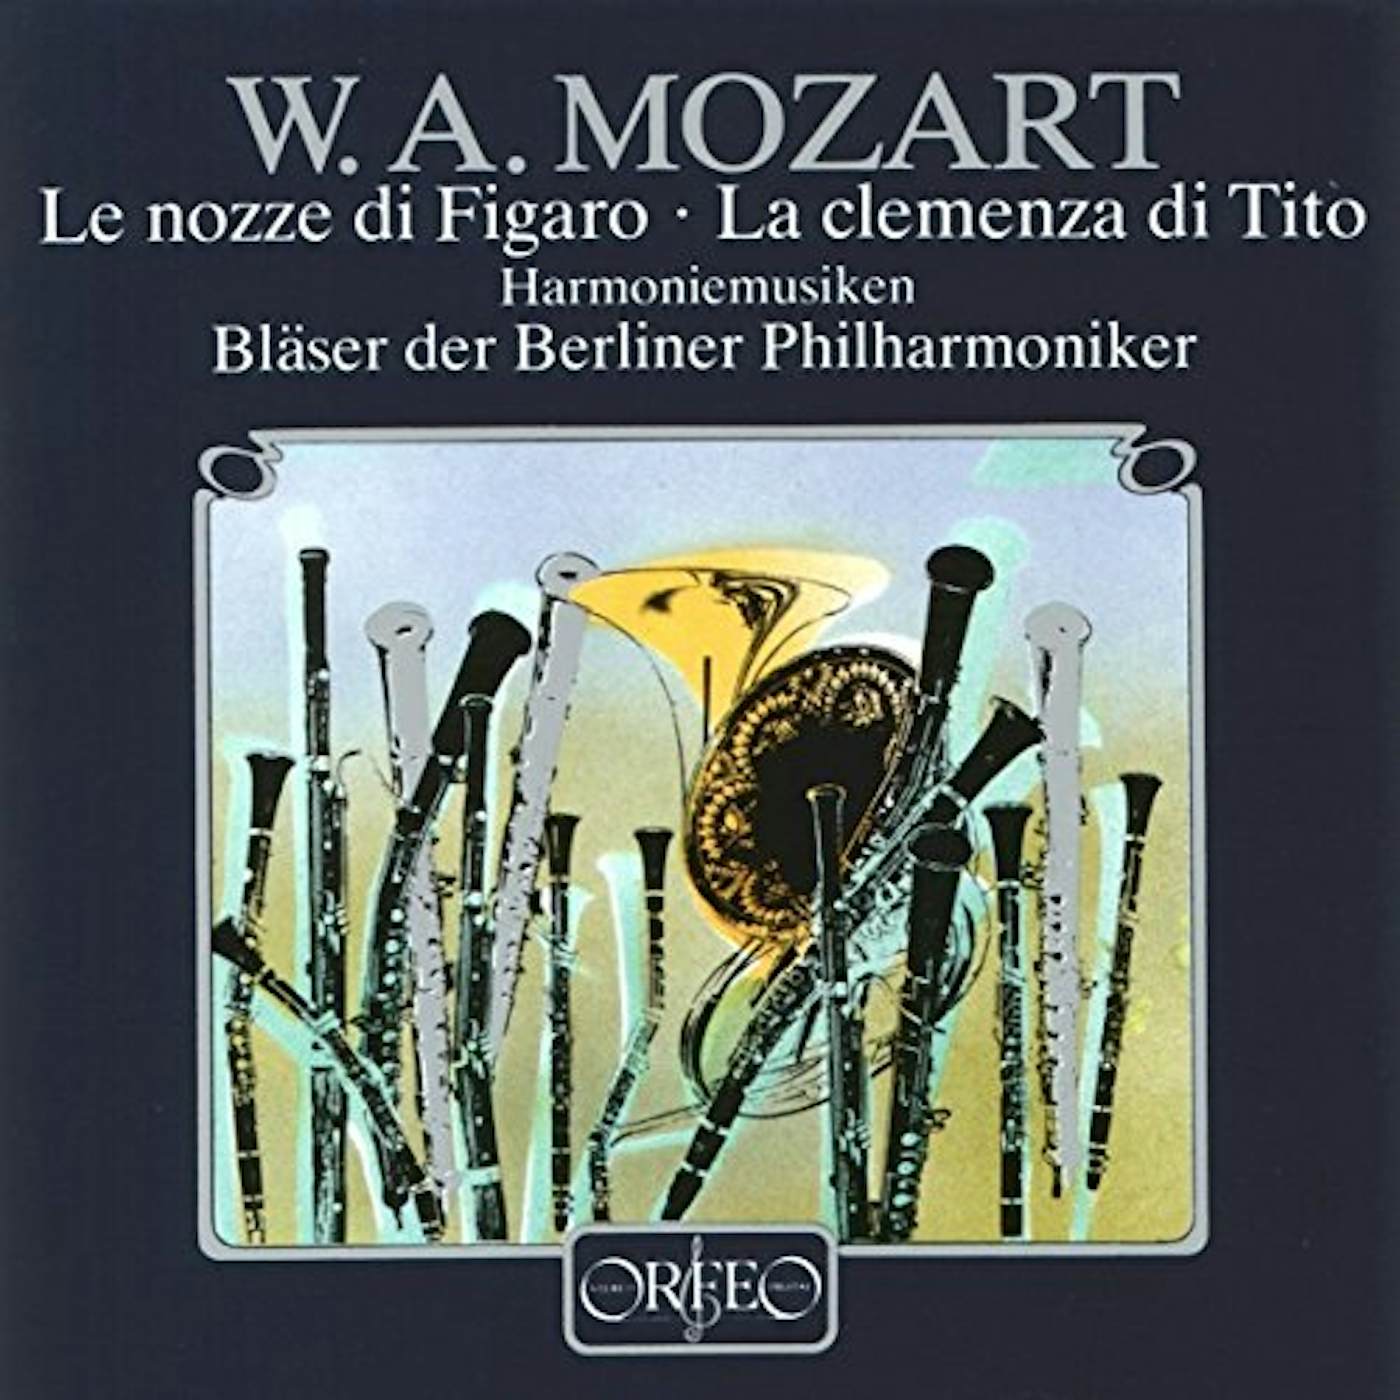 Bläser der Berliner Philharmoniker LE NOZZE DI FIGARO Vinyl Record